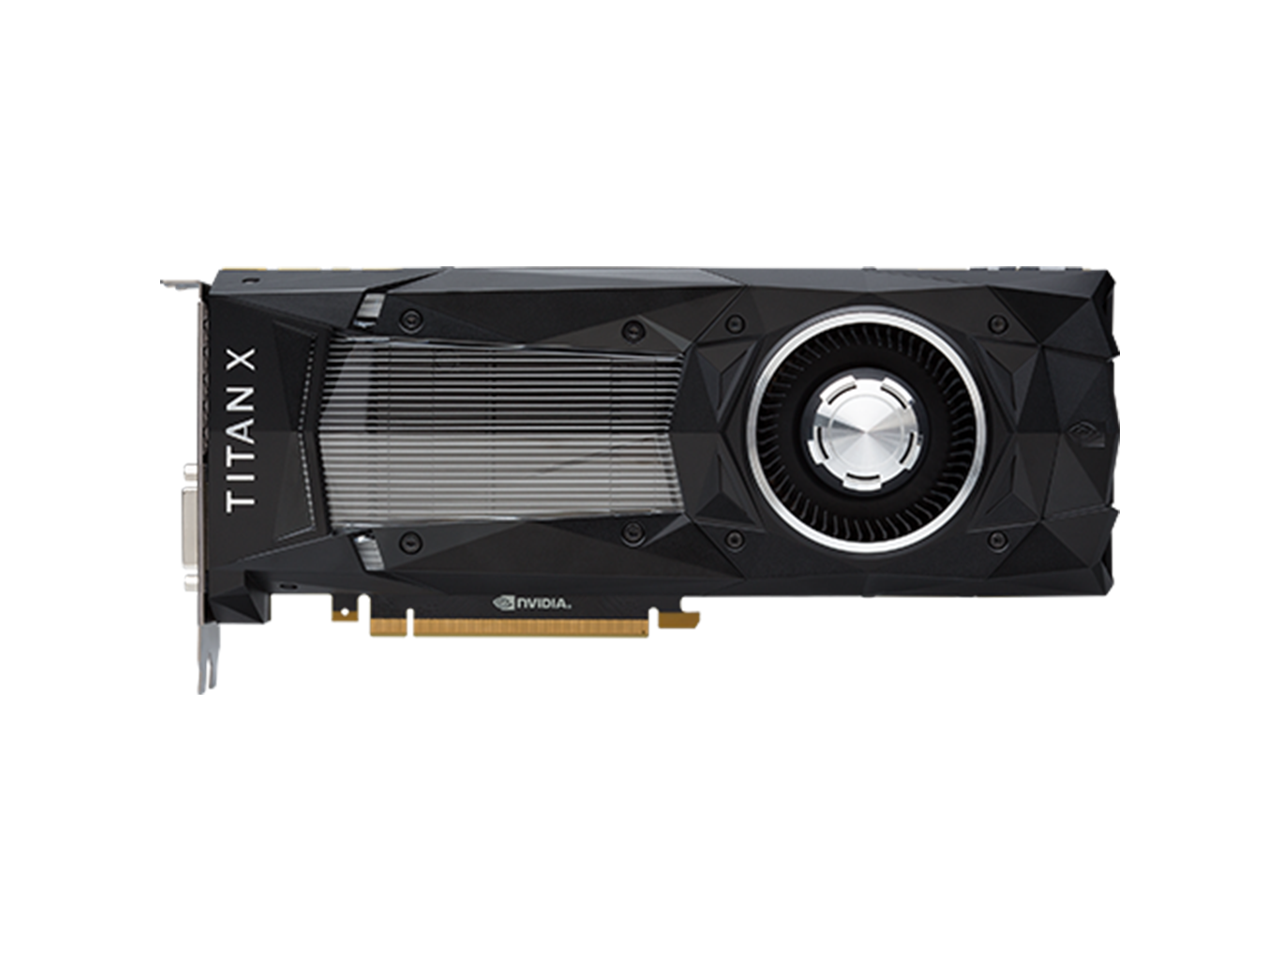 NVIDIA GeForce GTX TITAN Xp 12 GB GDDR5X 1.42 GHz Core 1.58 GHz Boost Clock Graphics Card